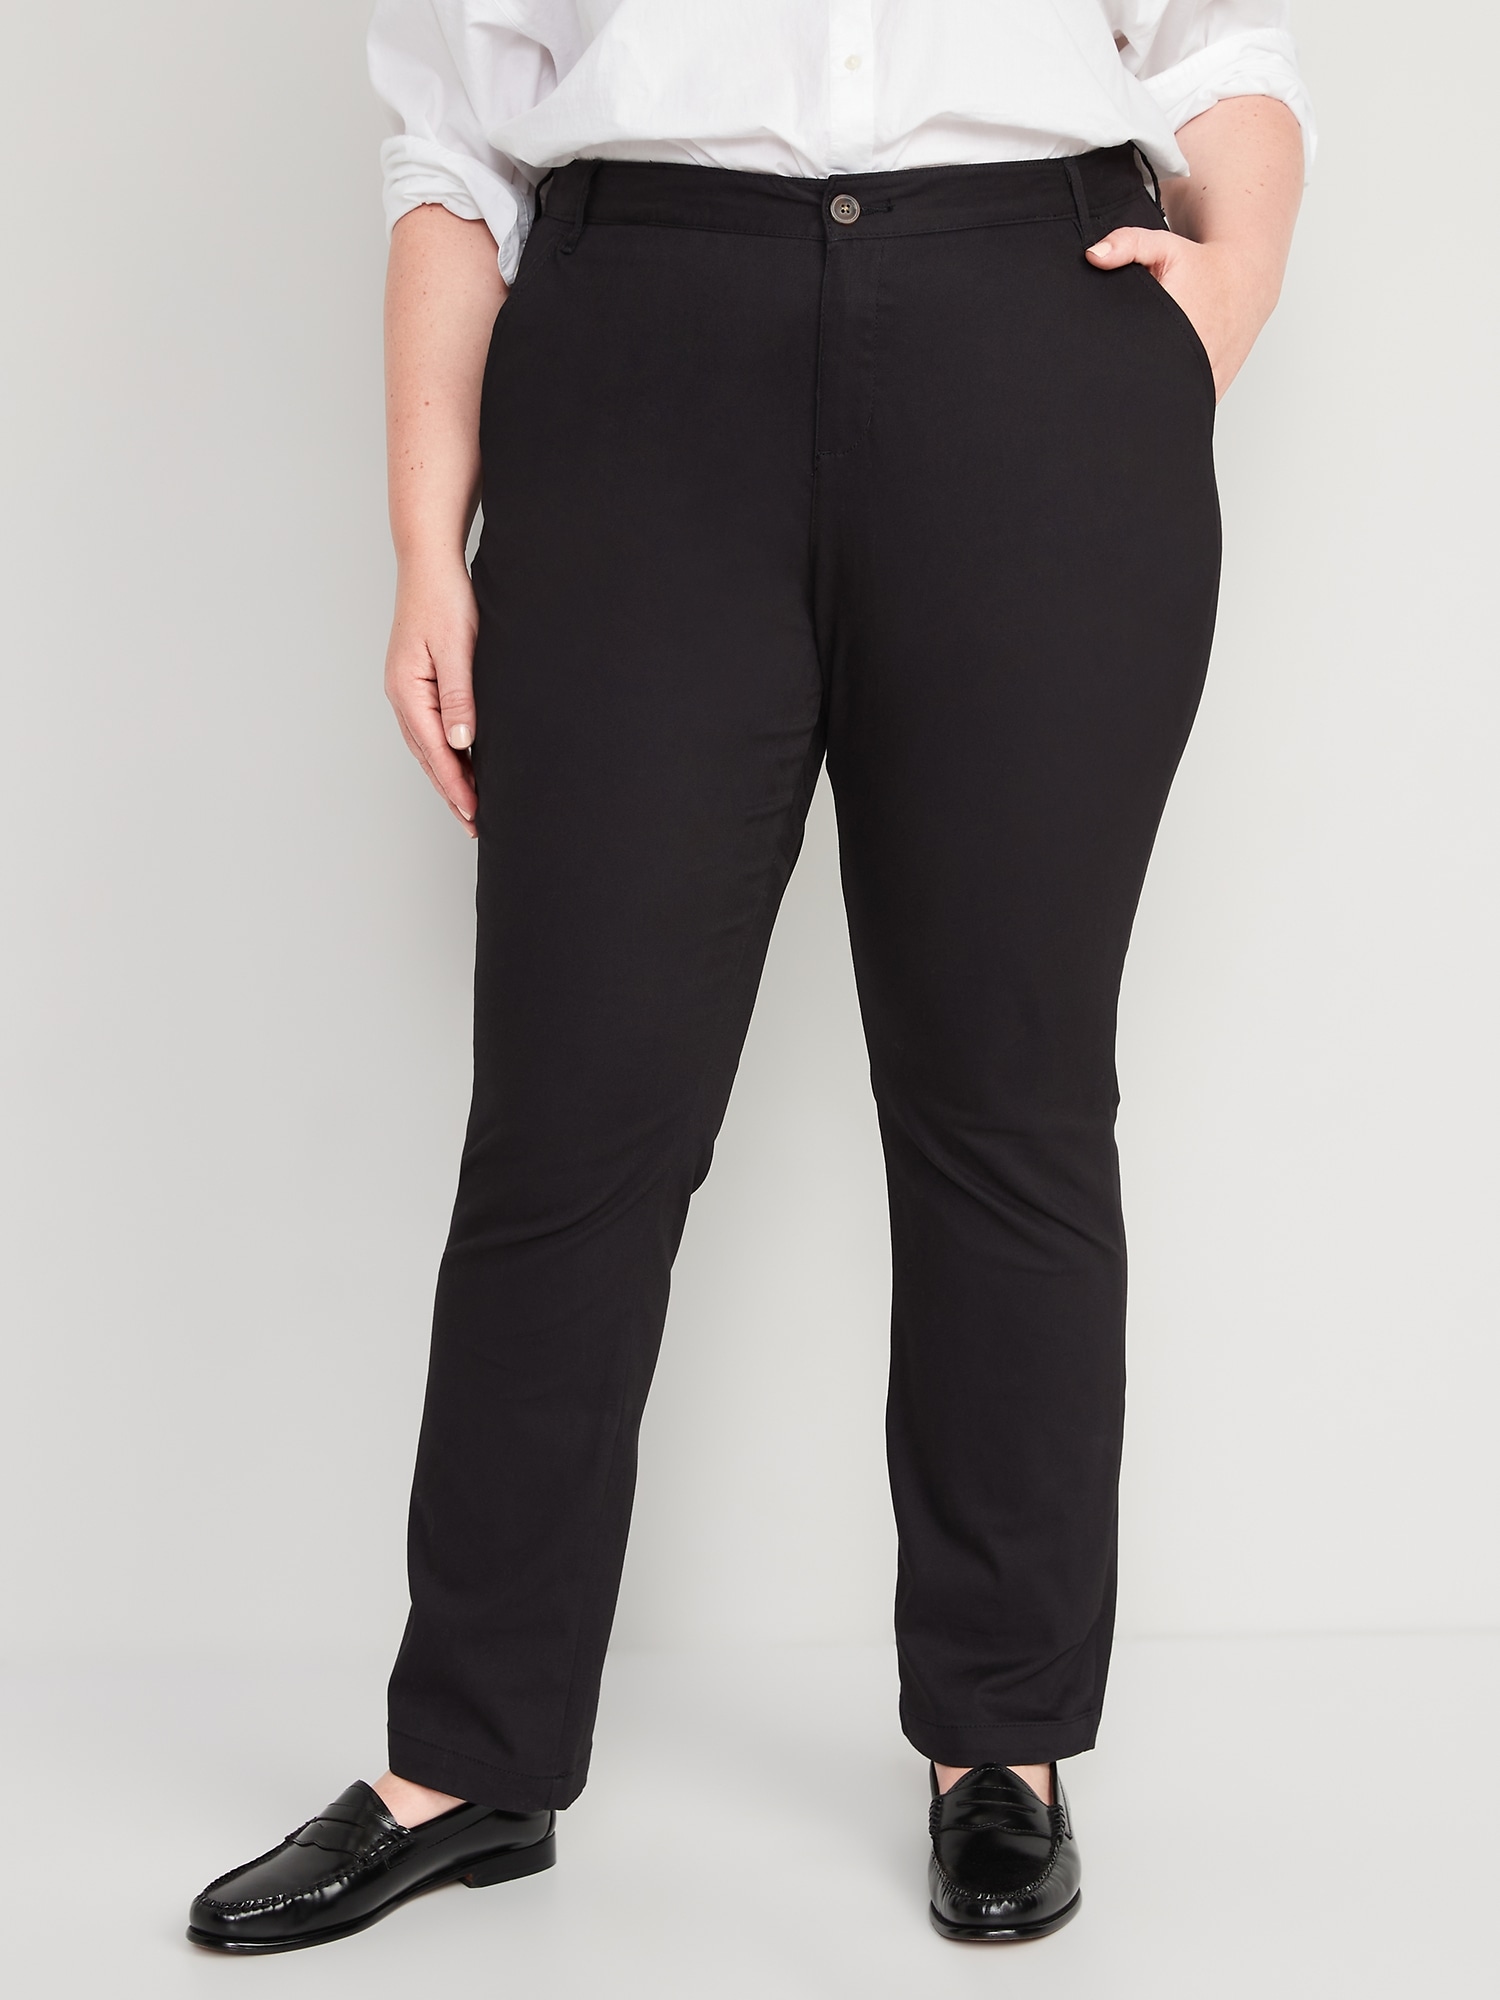 Black Slacks Pants For Women - Best Price in Singapore - Feb 2024 |  Lazada.sg